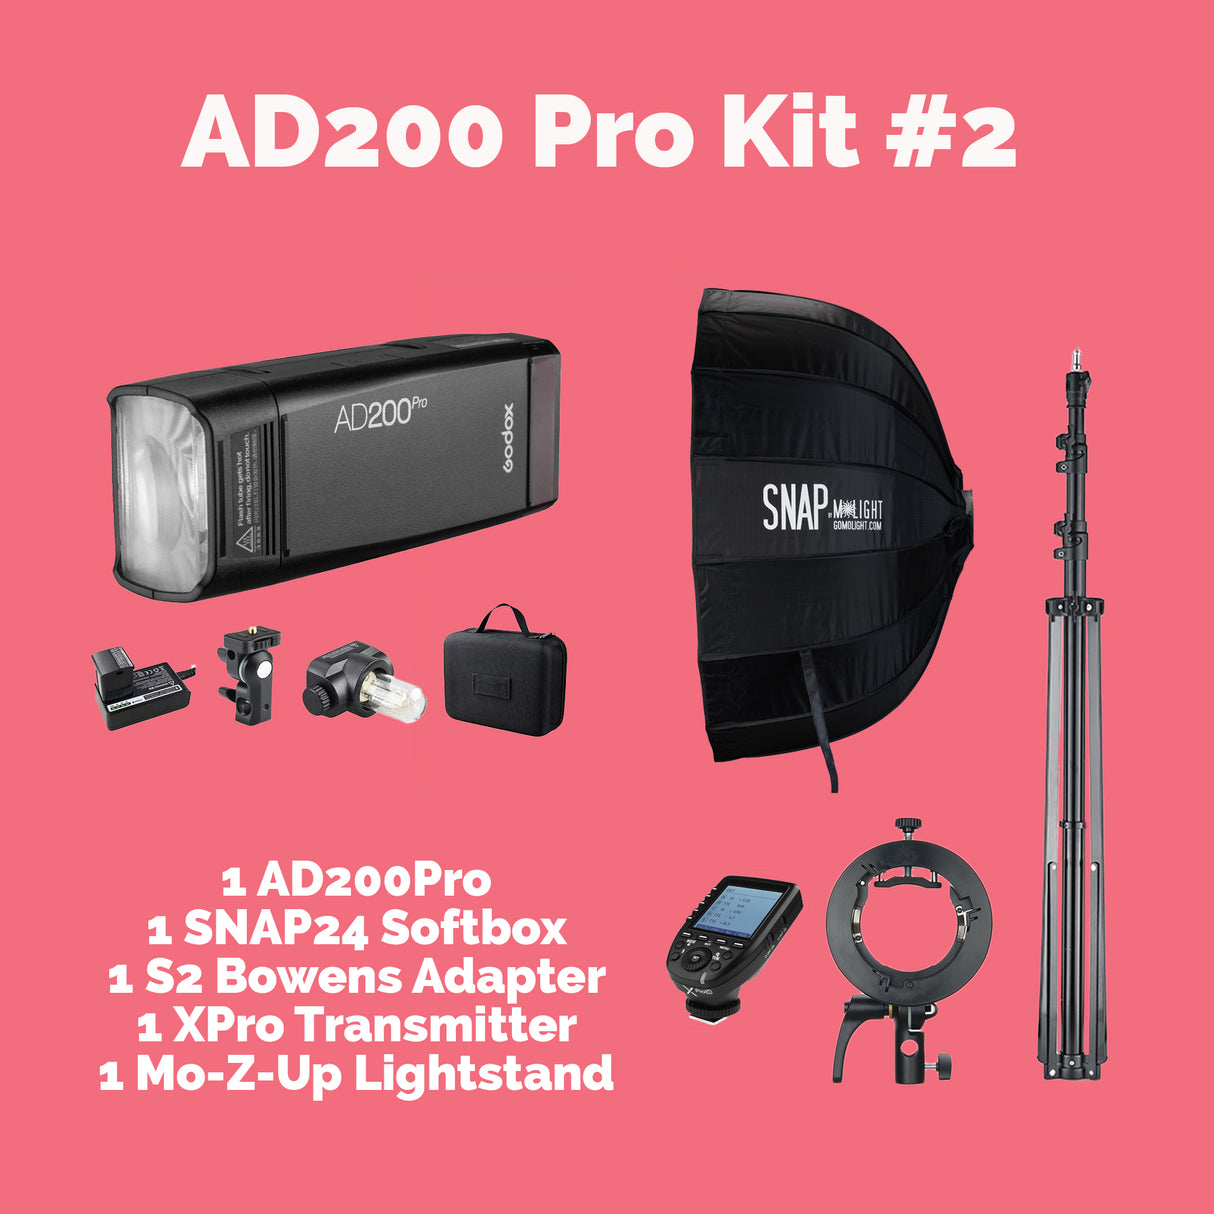 Godox AD300Pro AD100Pro 3-Light Kit AD-KIT 1 B&H Photo Video